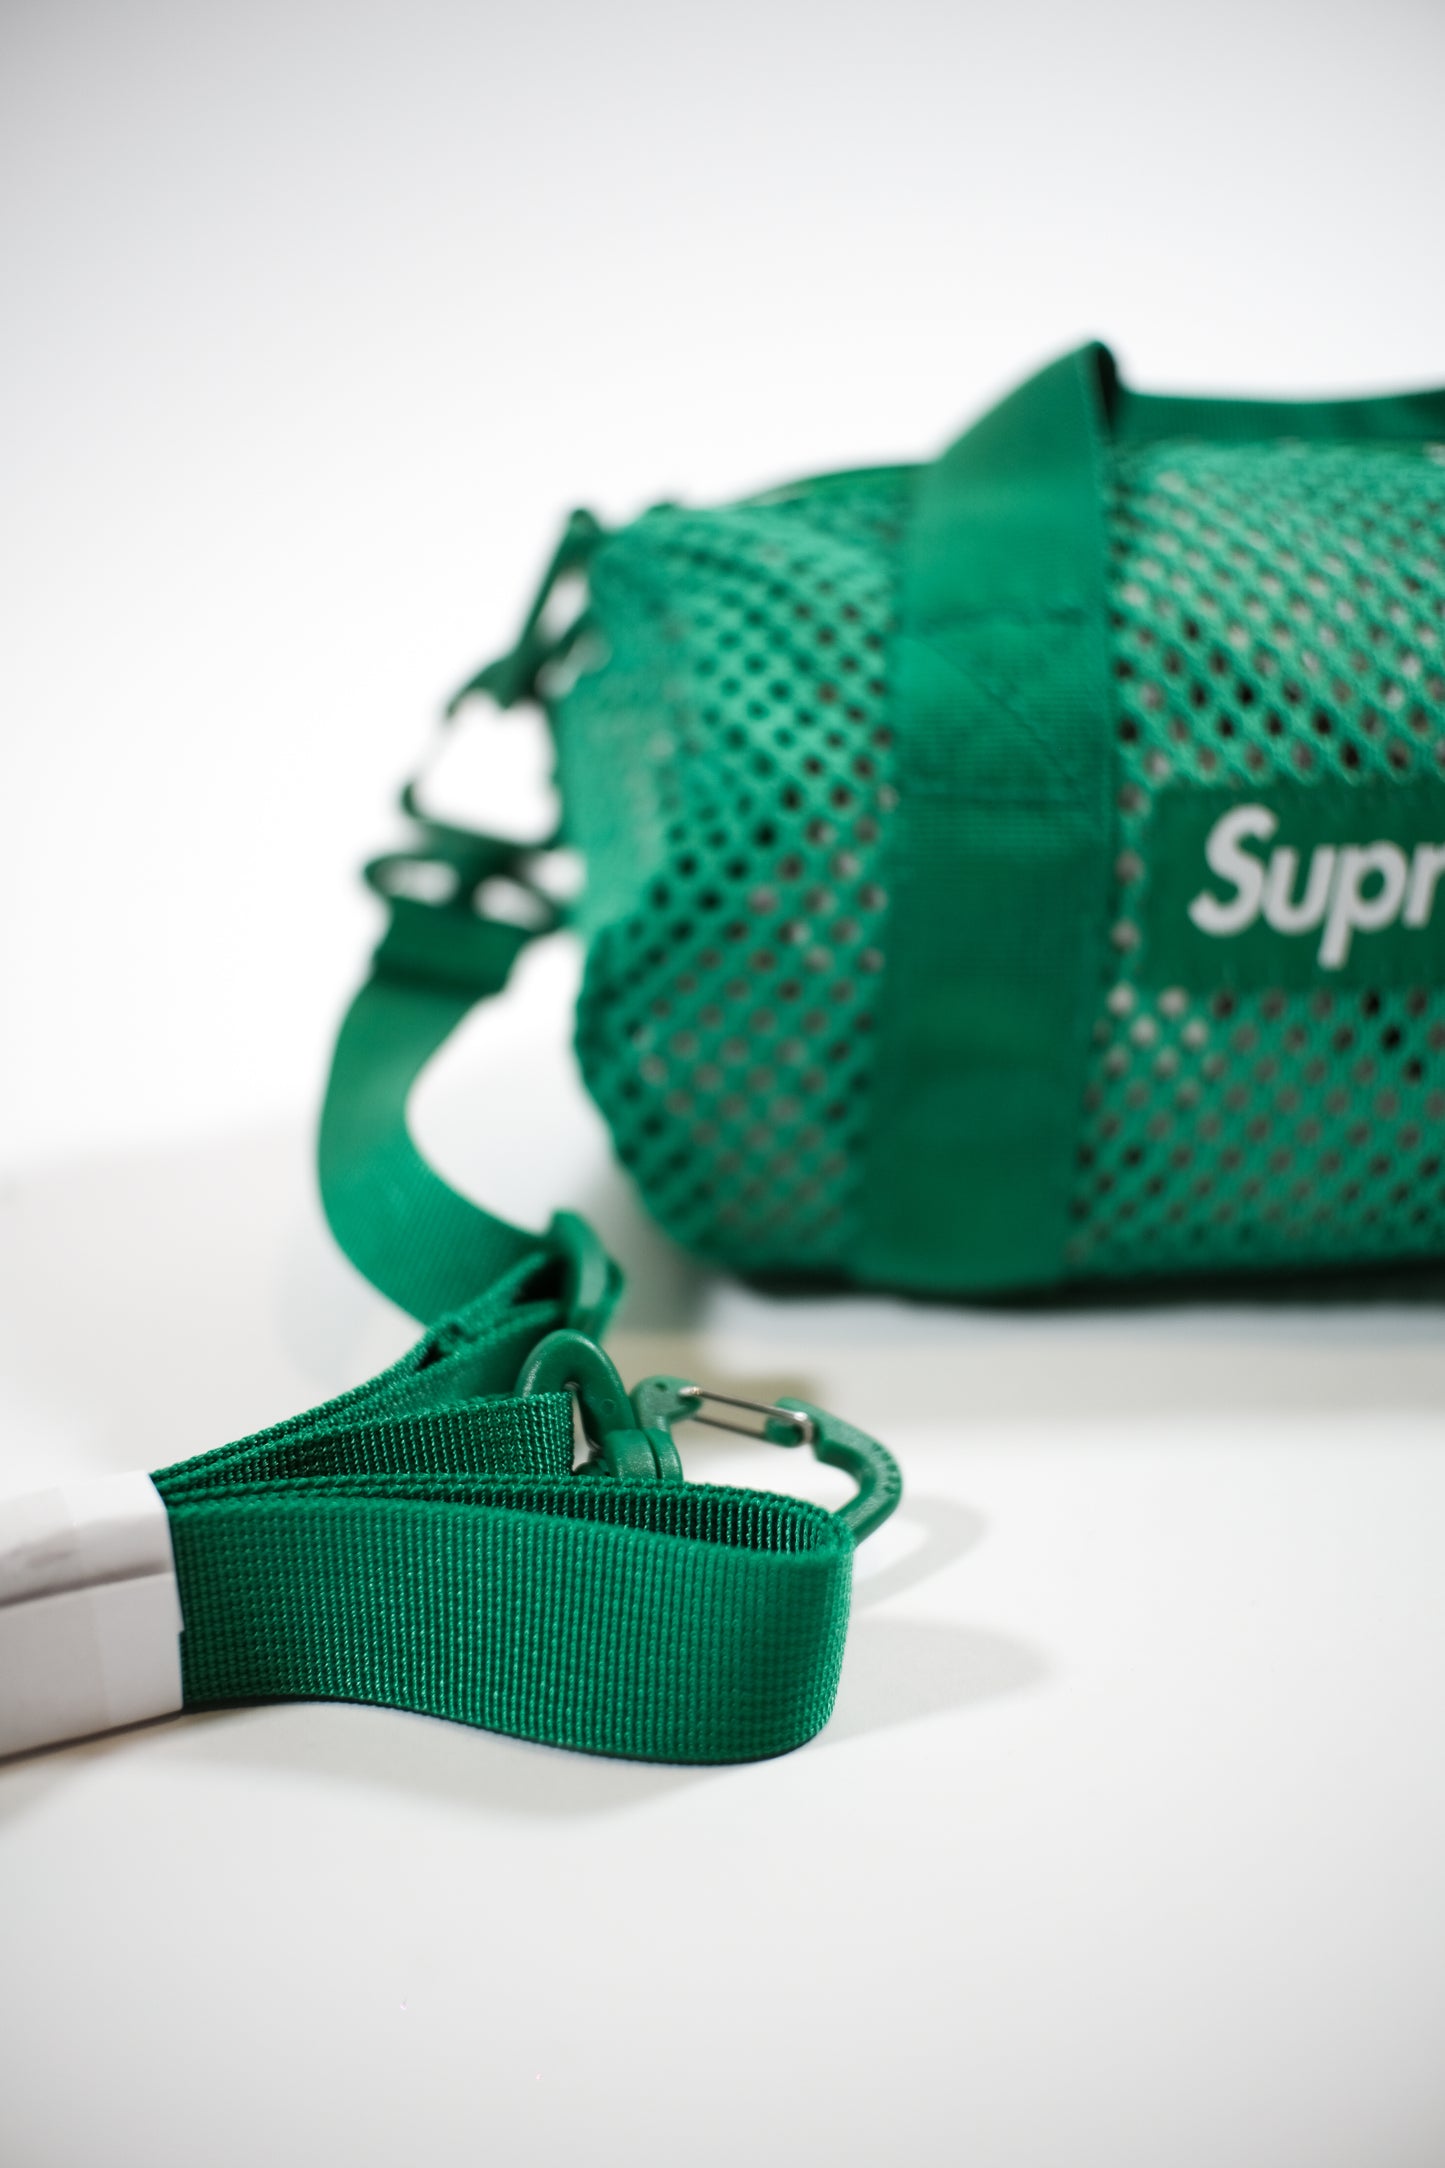 Supreme mesh mini duffle bag Green